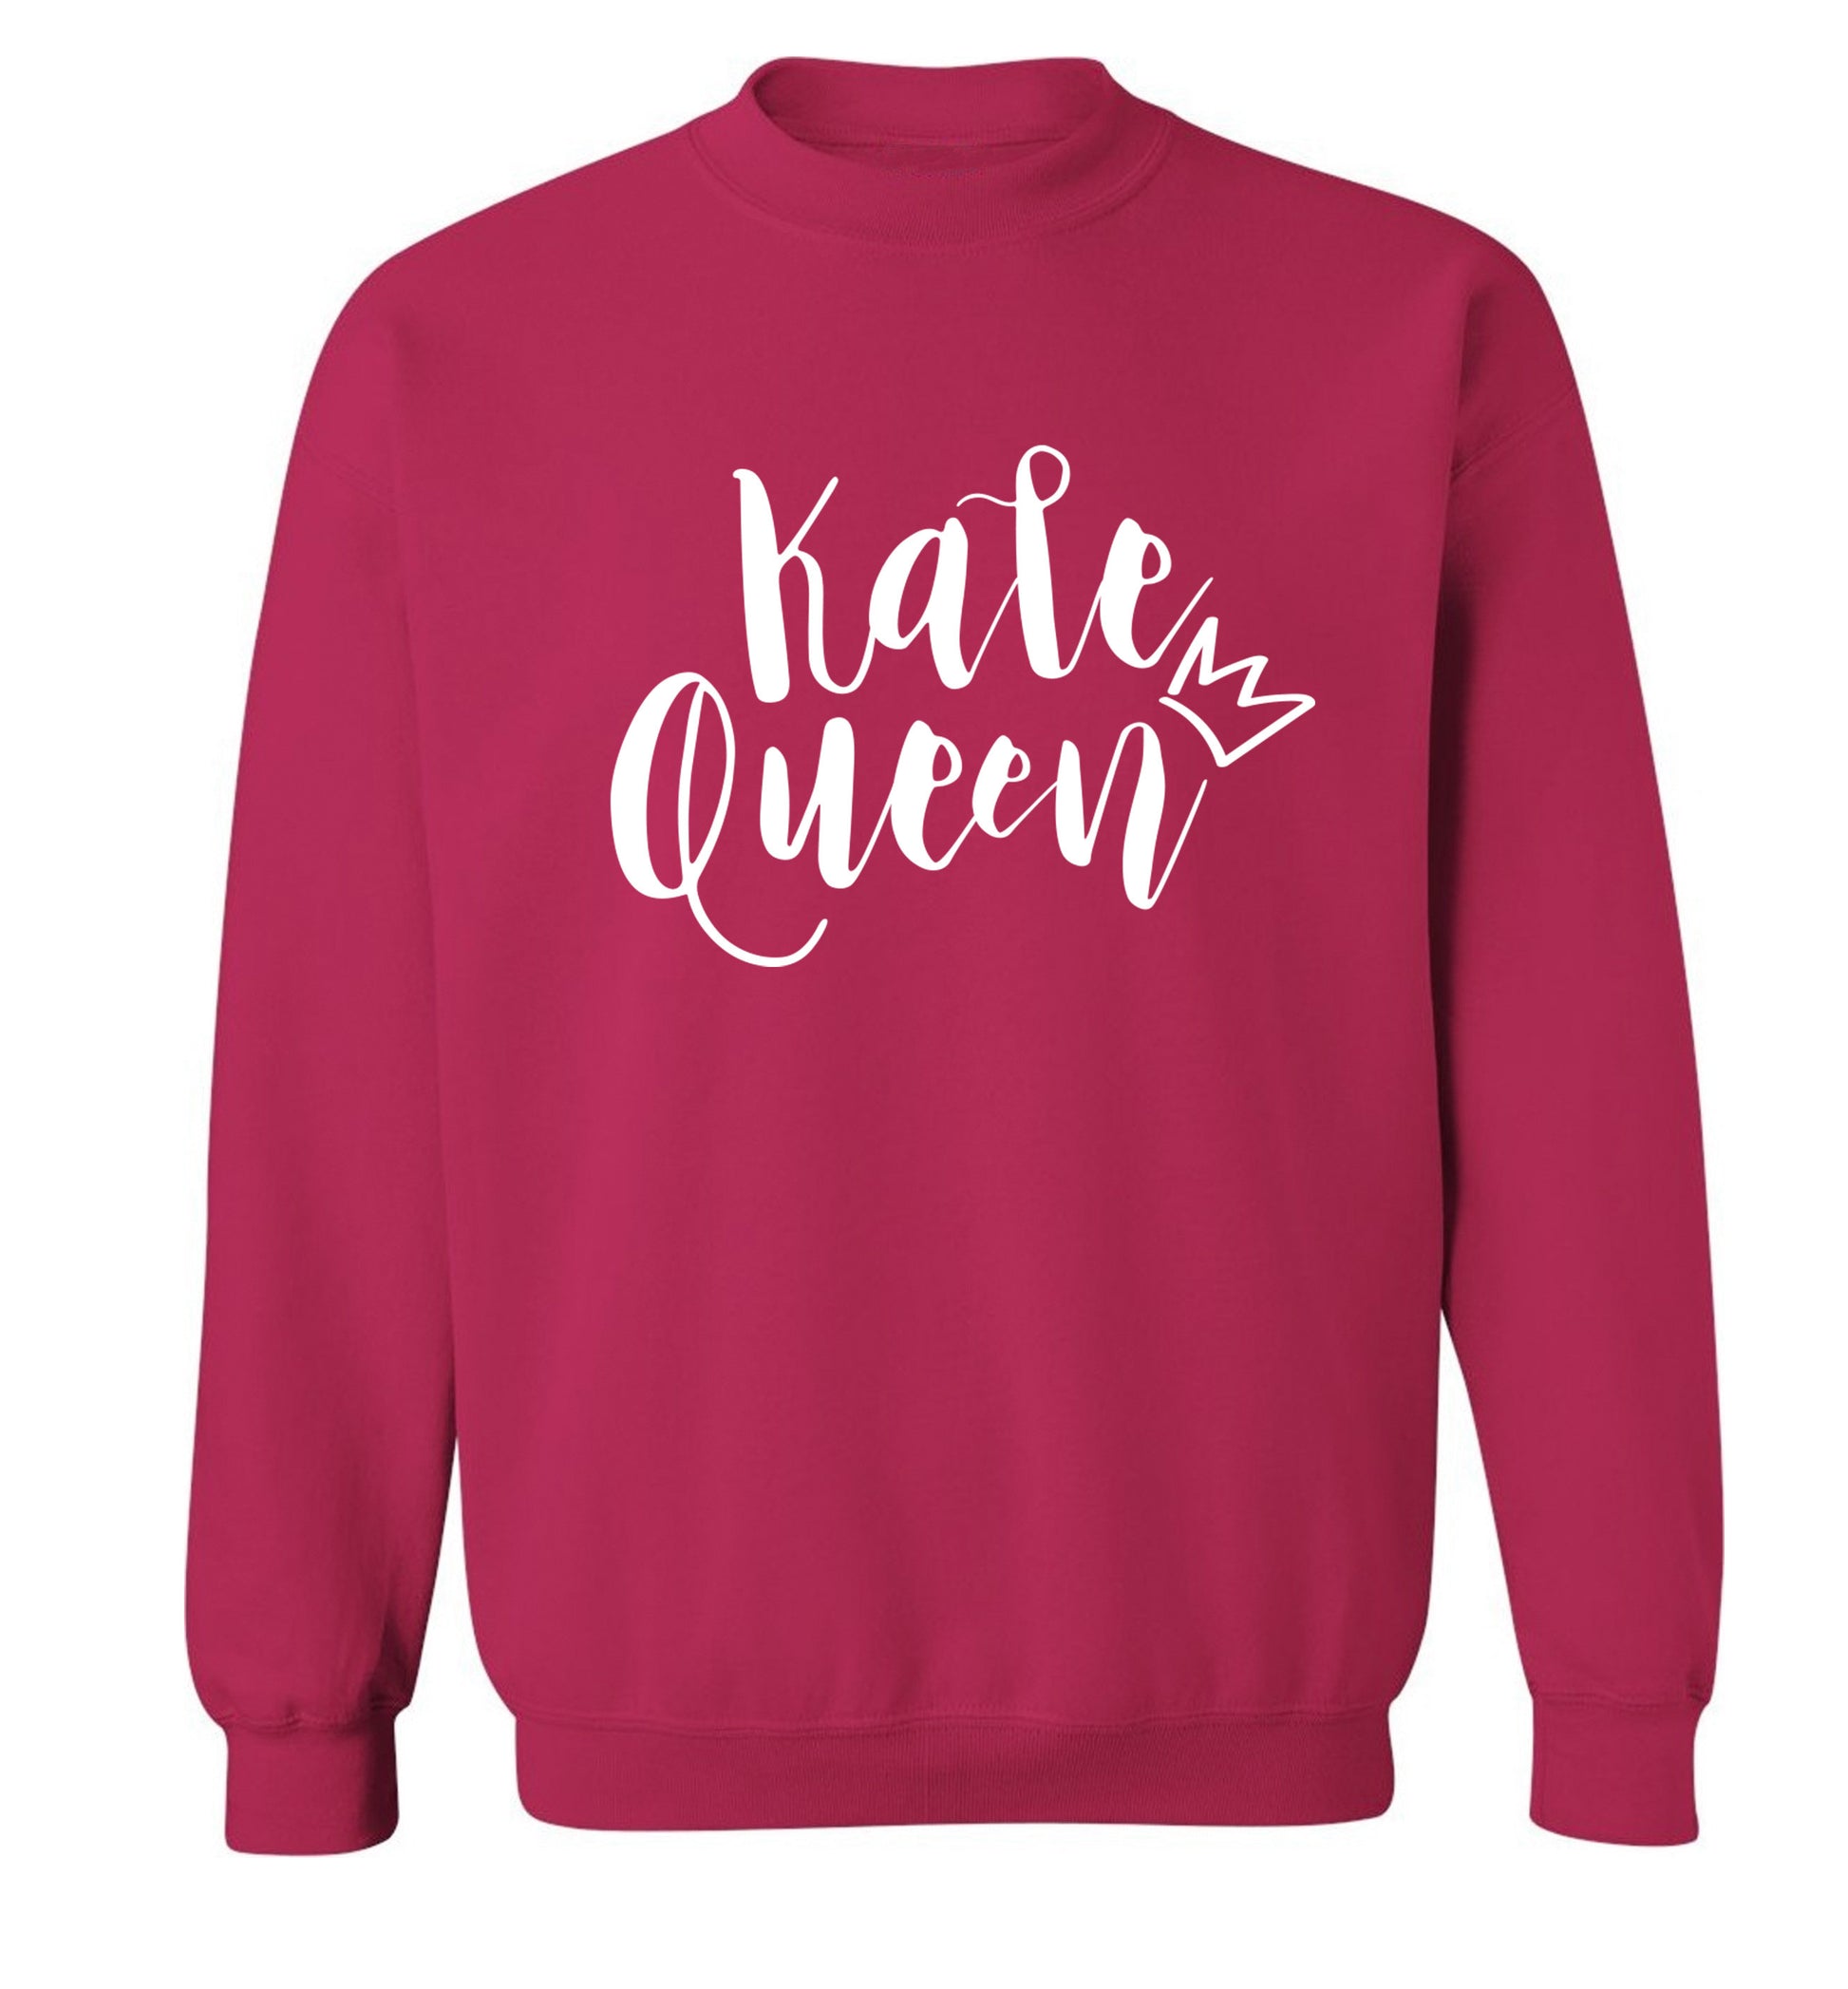 Kale Queen Adult's unisex pink  sweater XL